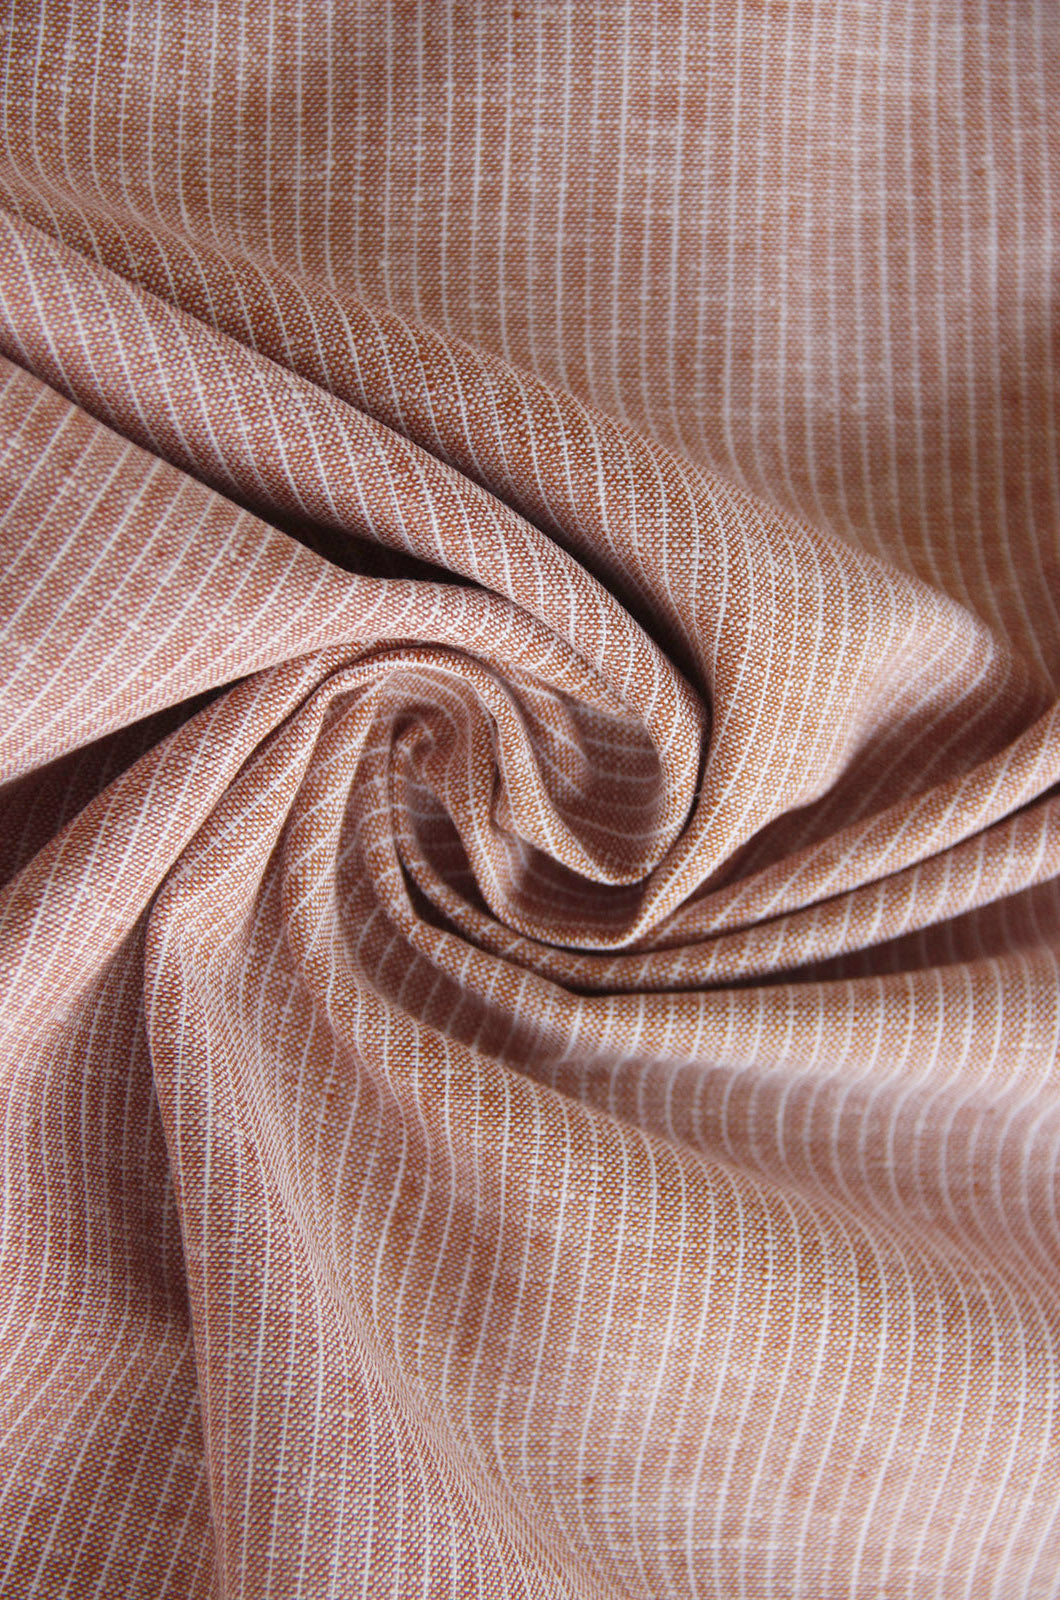 Buy 008-terra Half linen patterned fine stripes * From 50 cm